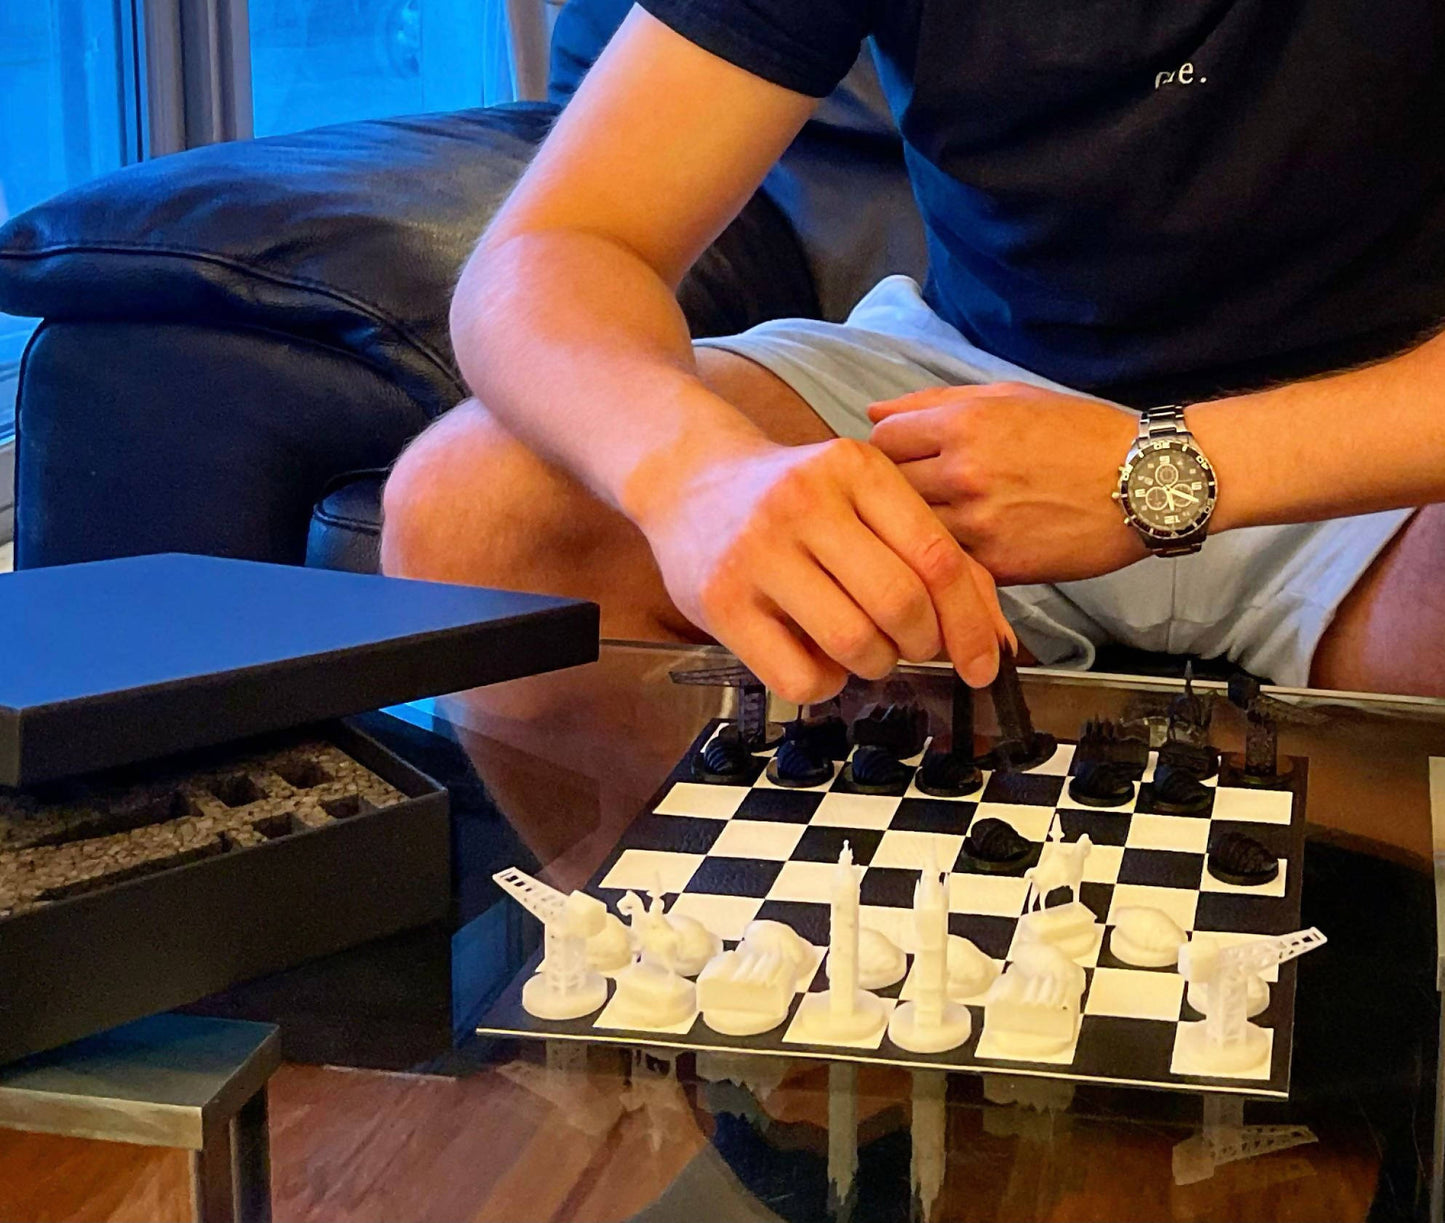 MINI Clydeside Chess Set